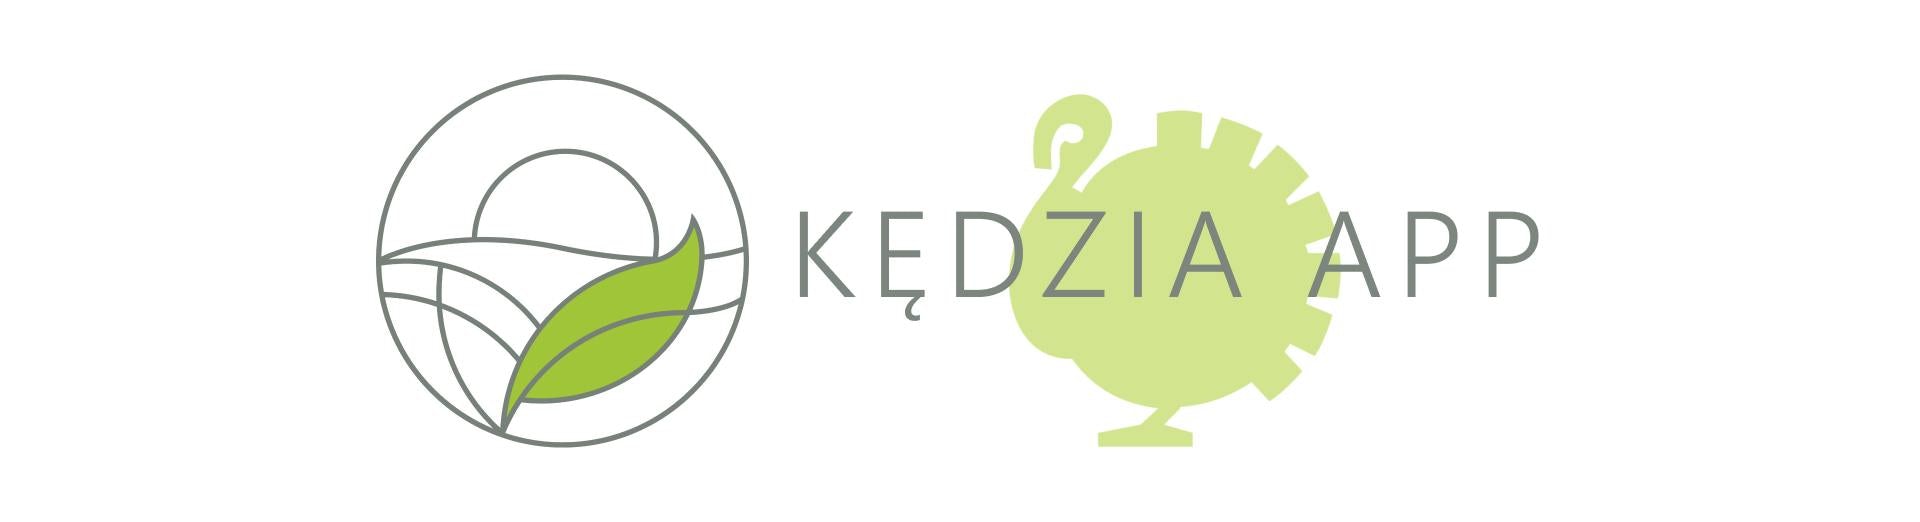 Banner with Kedzia App logo